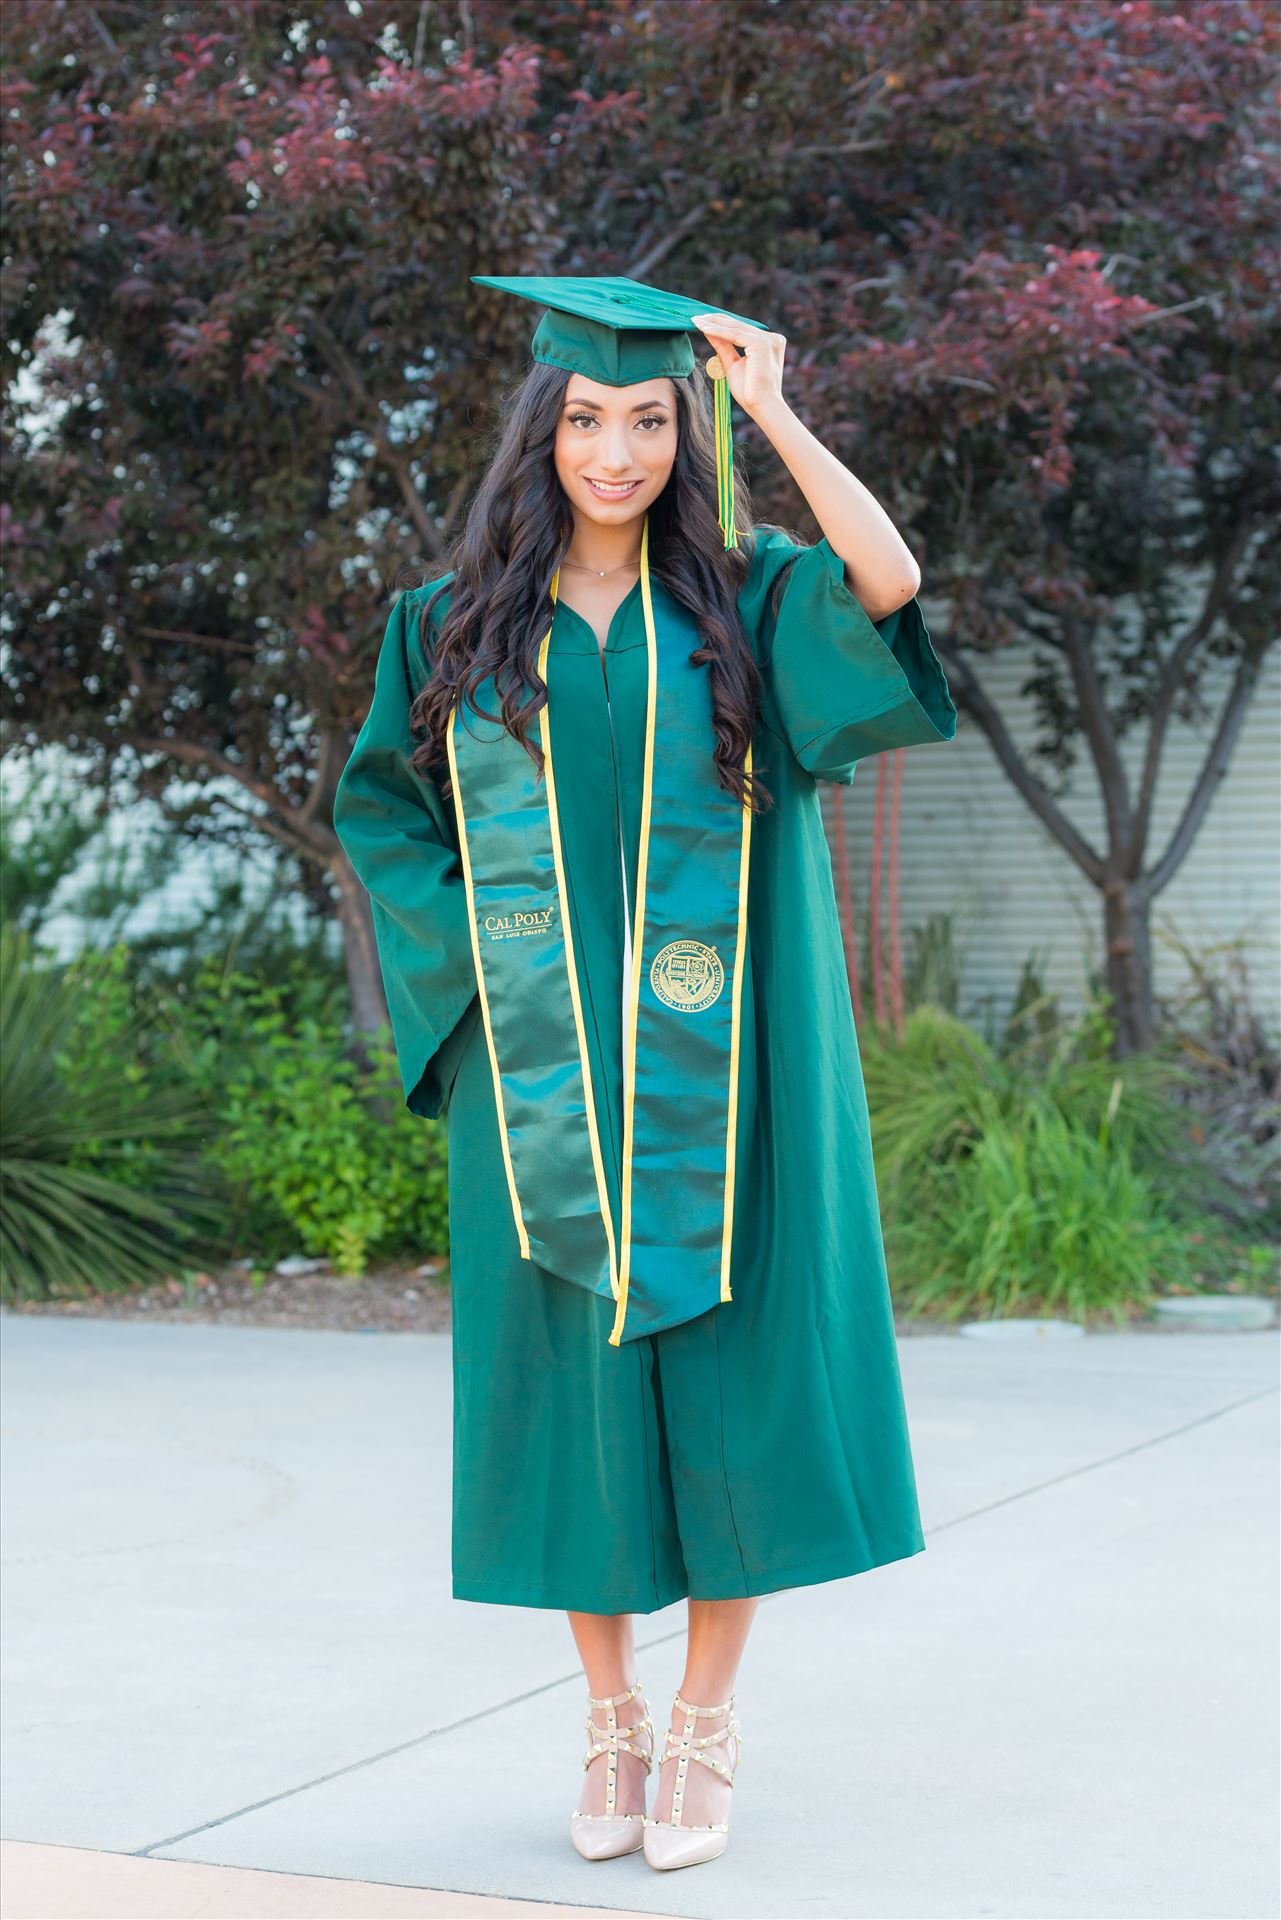 Vanessa Imani Graduation Portraits 20 -  by Sarah Williams